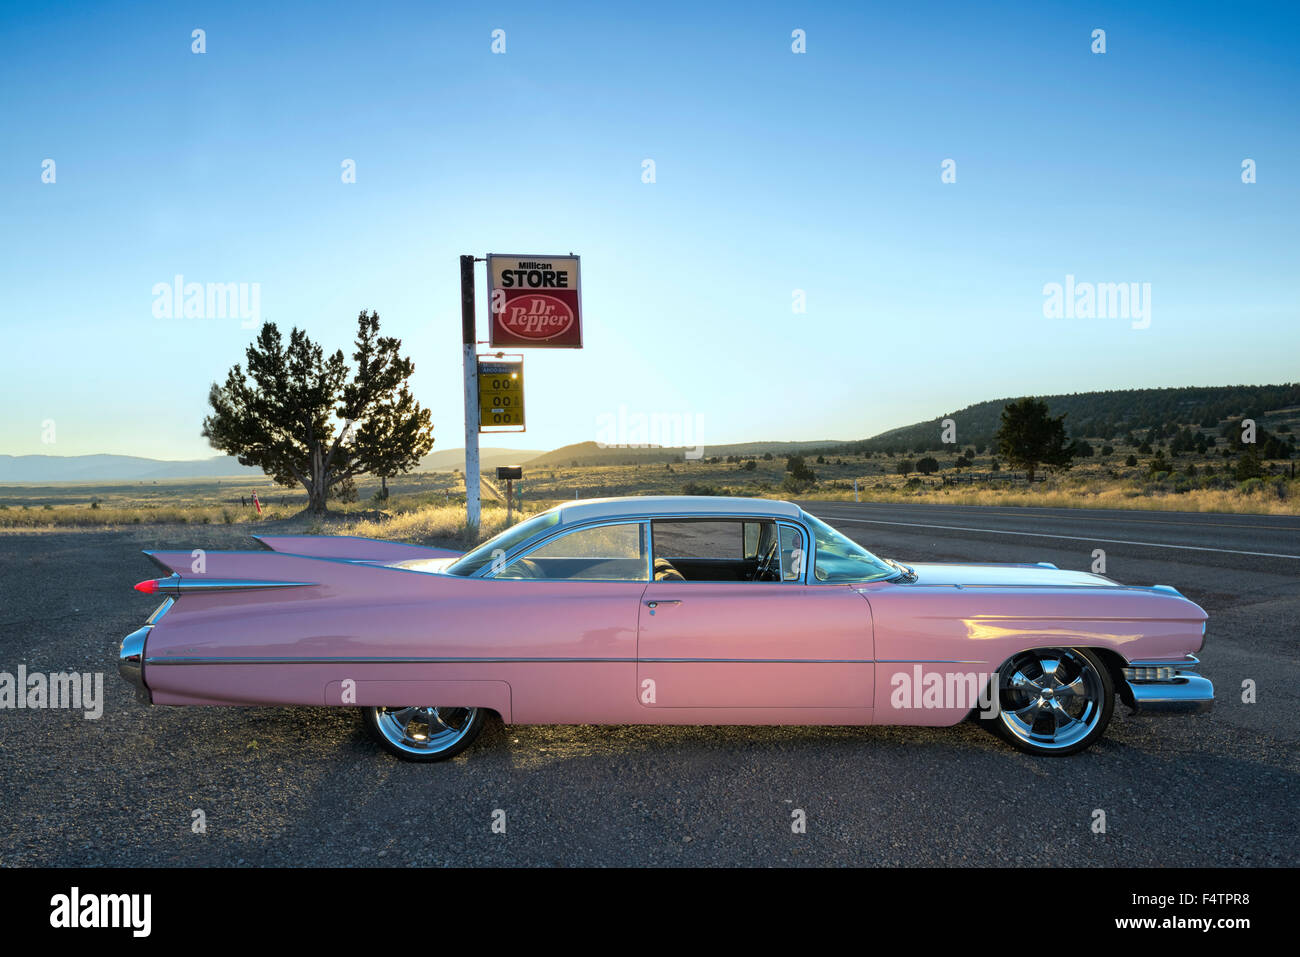 Stati Uniti d'America, Oregon, rosa cadiilac lungo l'autostrada Foto Stock